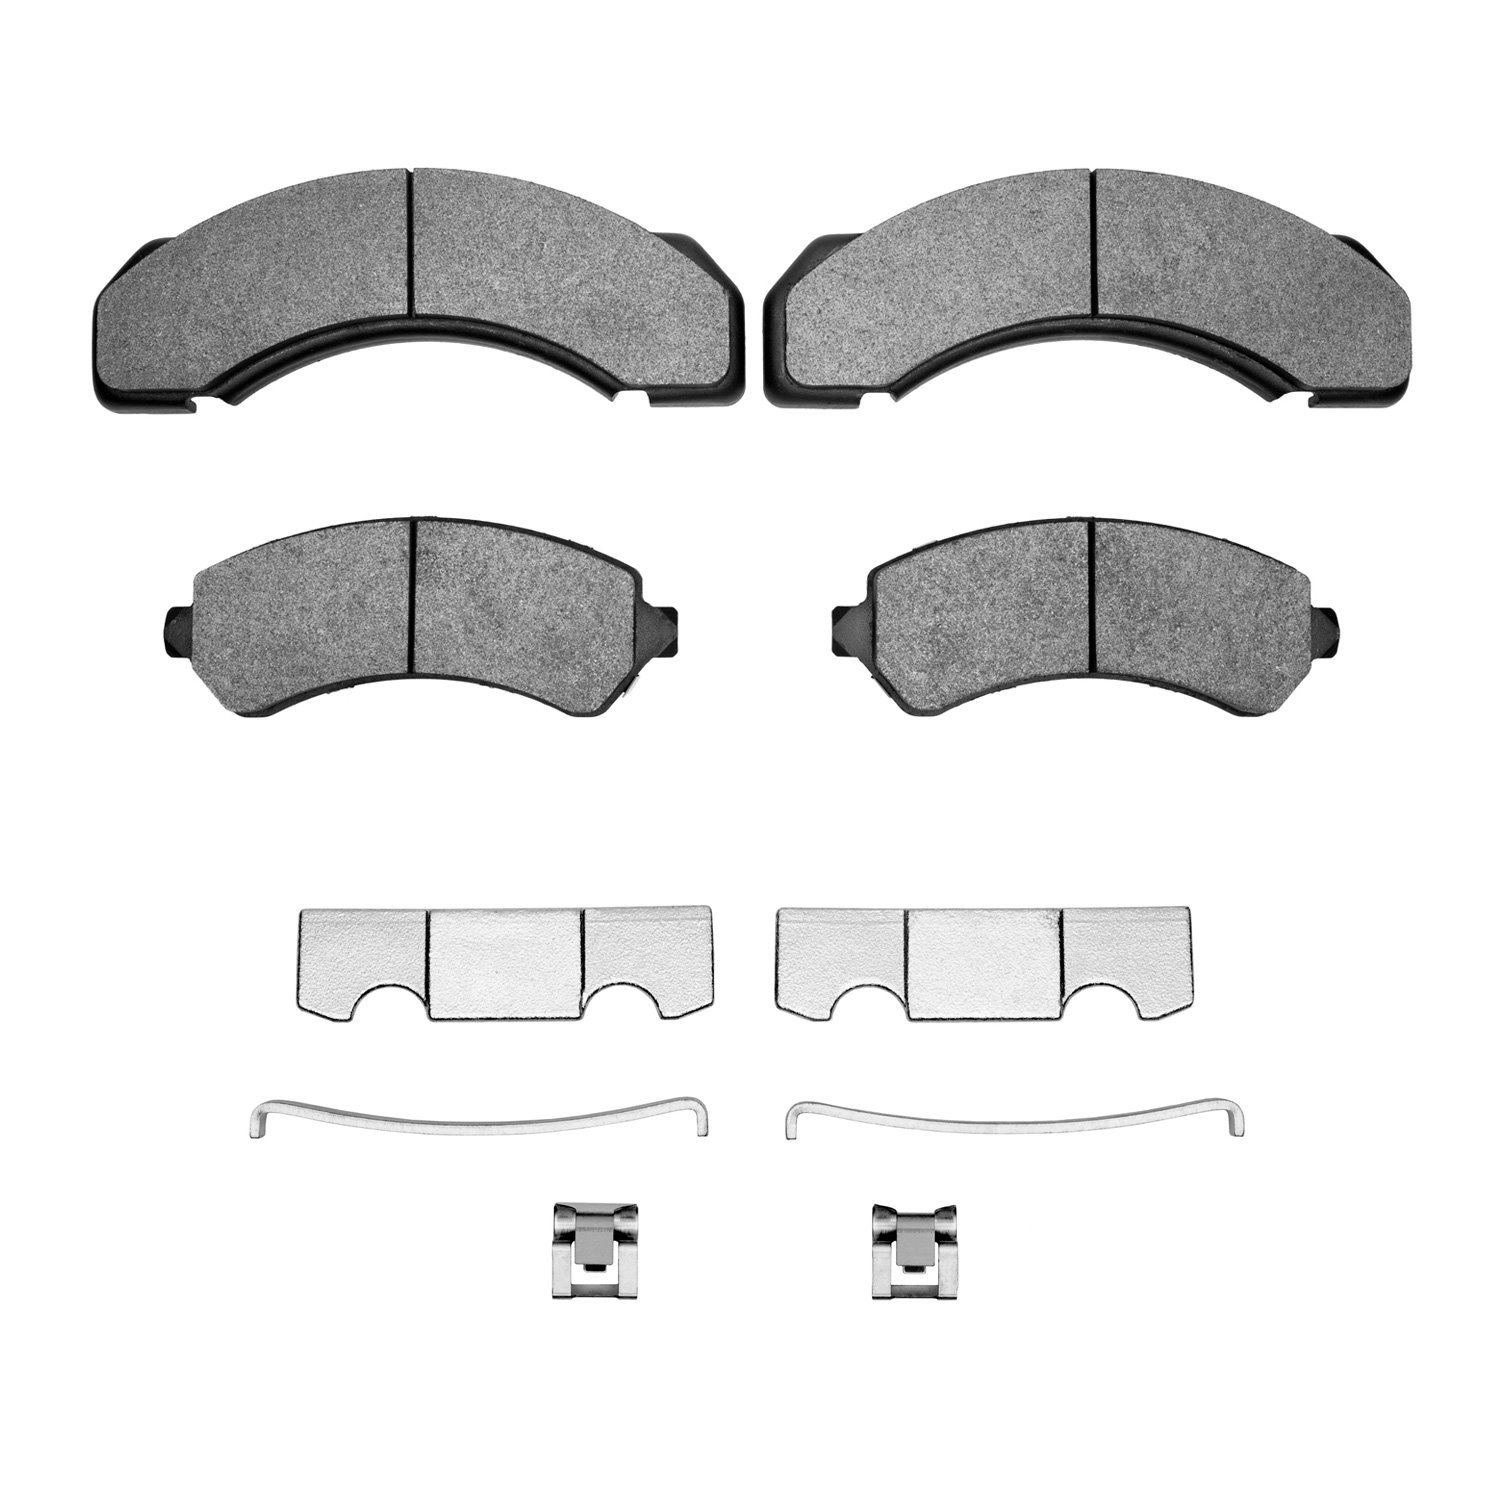 1551-0717-03 5000 Advanced Semi-Metallic Brake Pads & Hardware Kit, 1973-2012 Multiple Makes/Models, Position: Rear,Fr,Fr & Rr,F